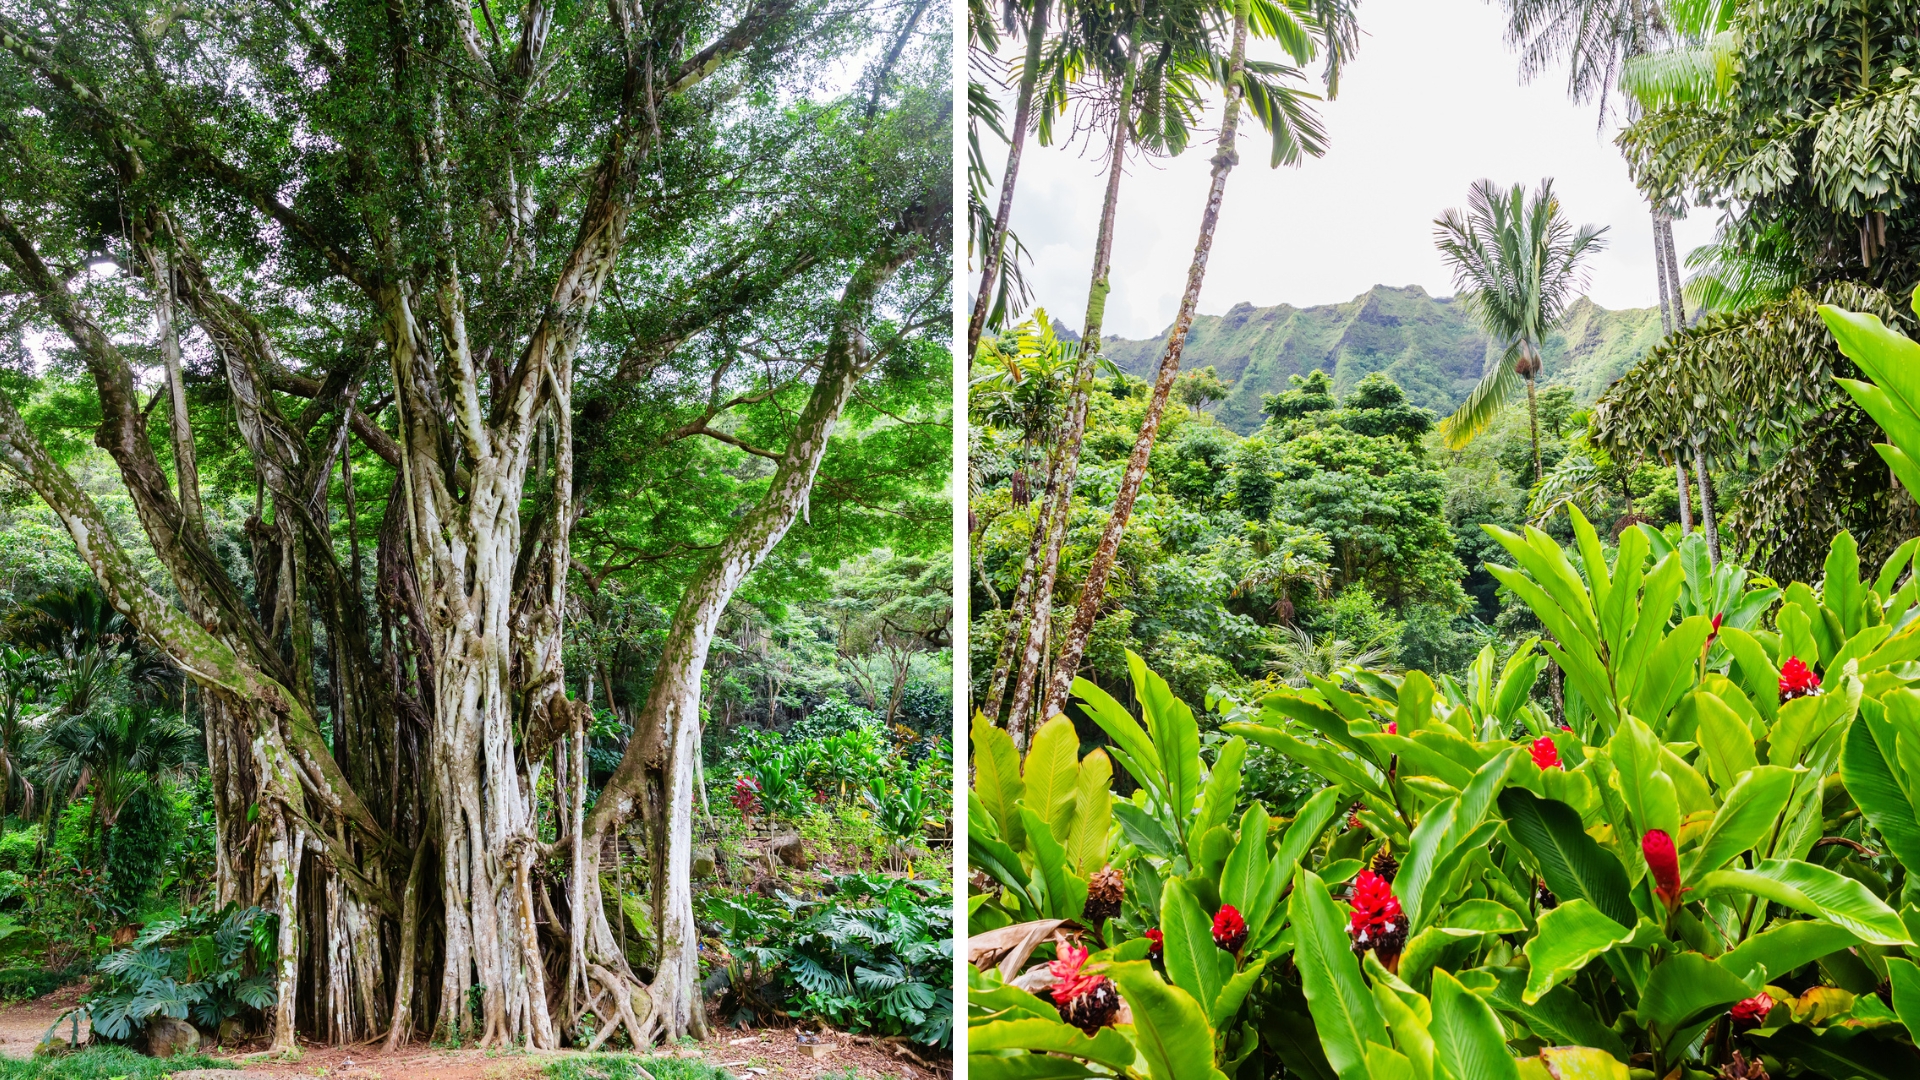 Tips for Visiting Botanical Gardens on Oahu